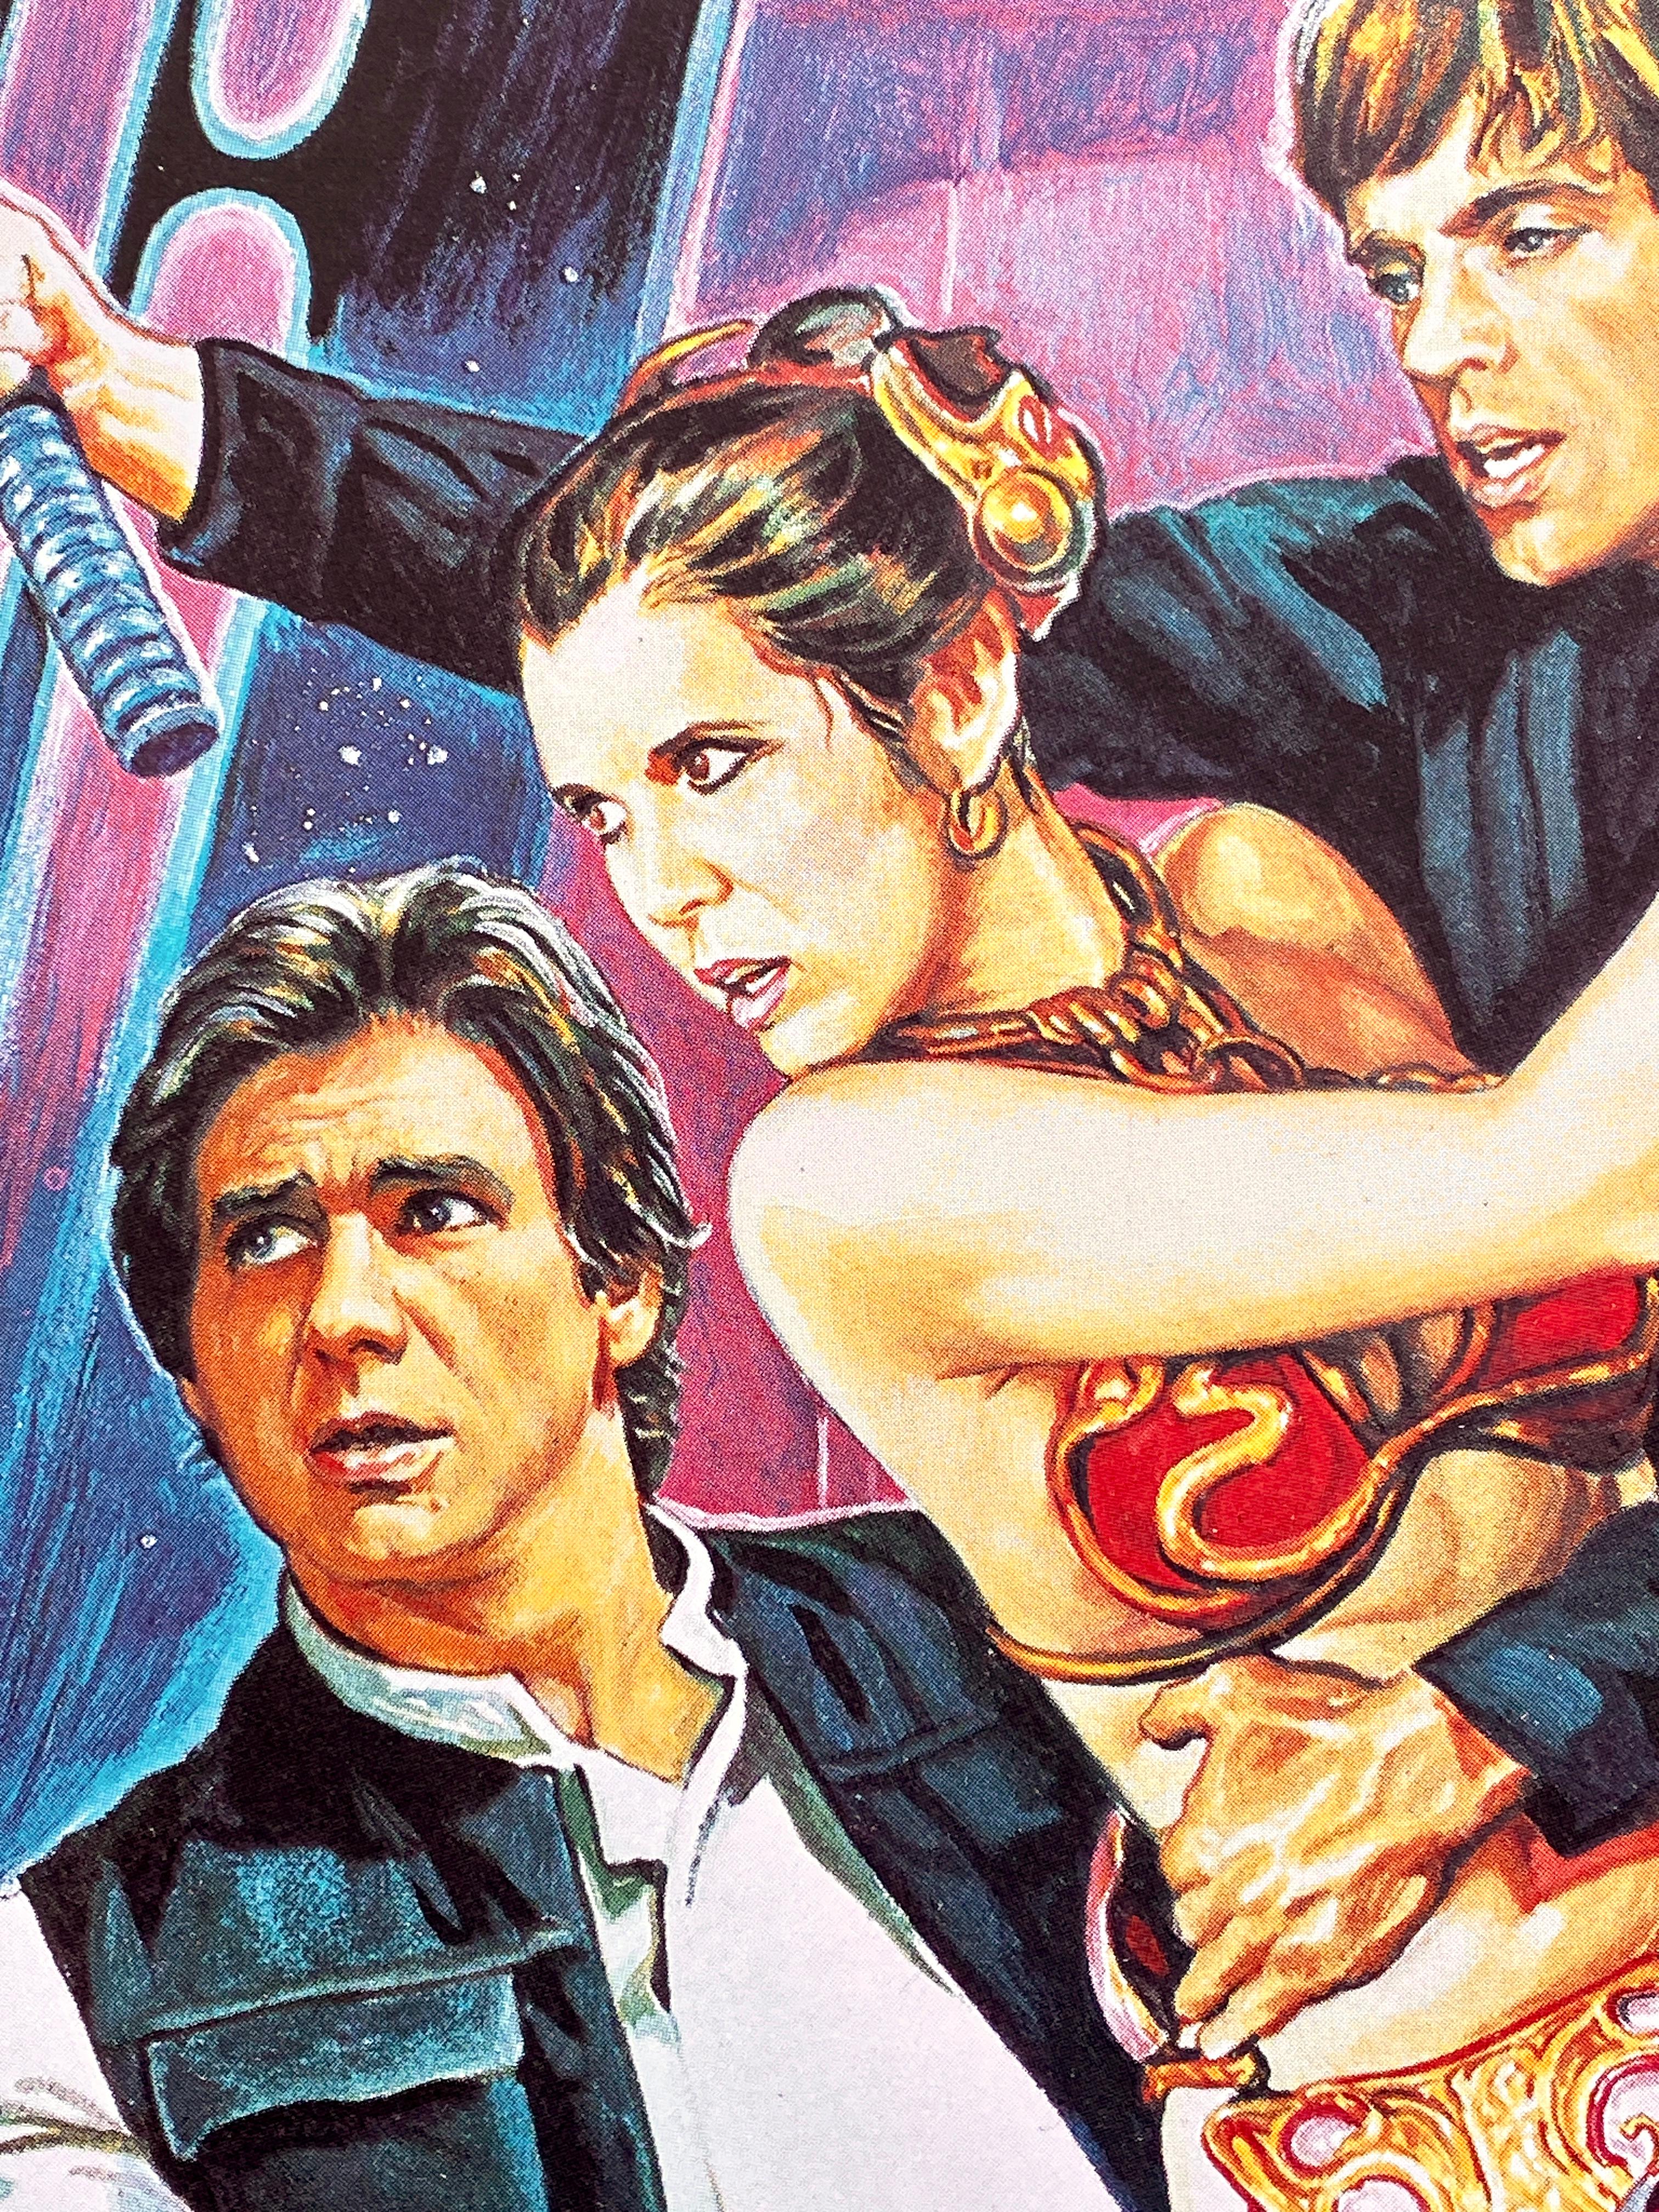 Other Star Wars 'Return of the Jedi' Original Vintage British Quad Movie Poster, 1983